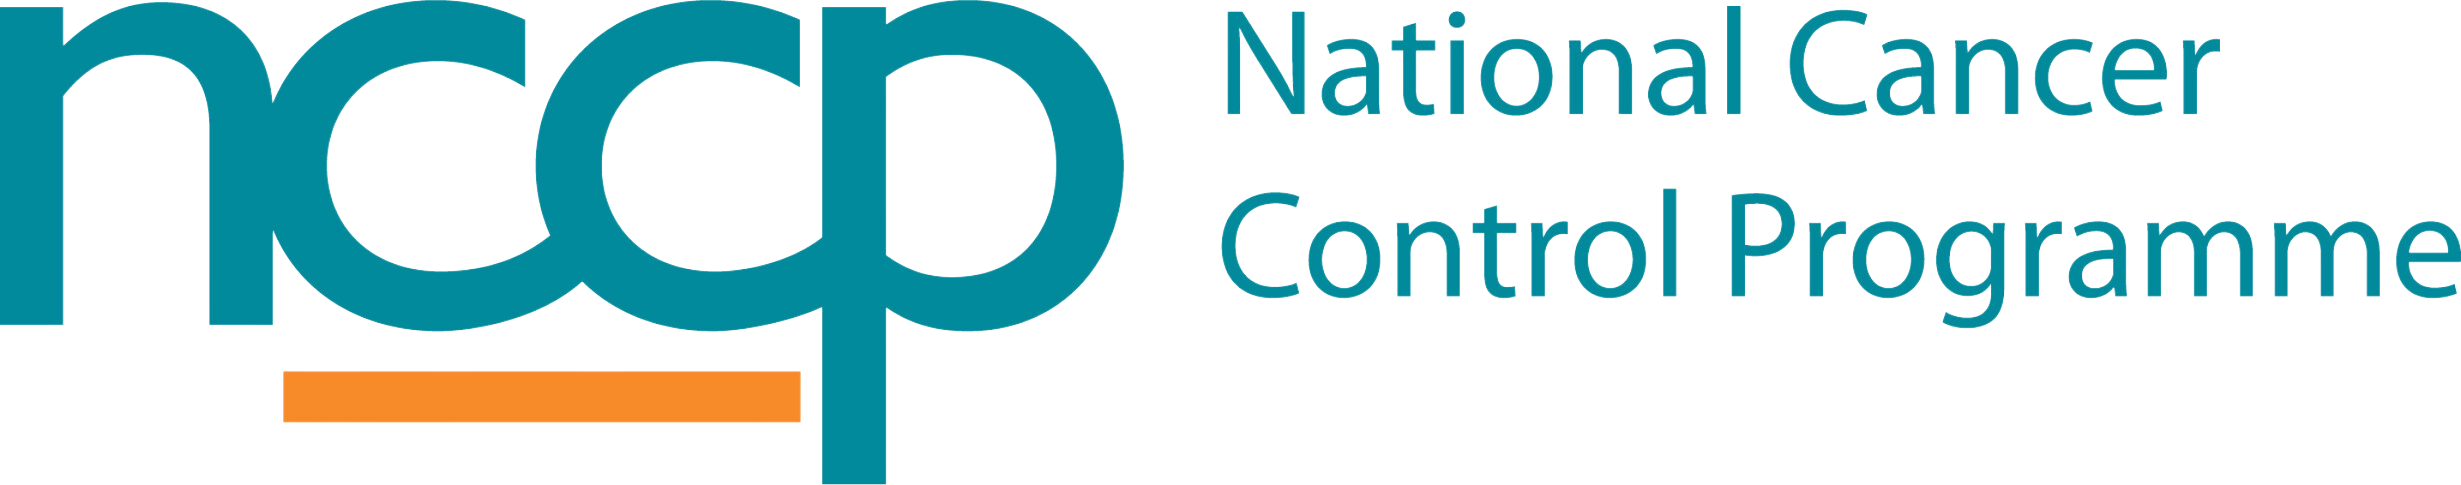 National Cancer Control Programme, Health Service Executive (NCCP, HSE) - Logo